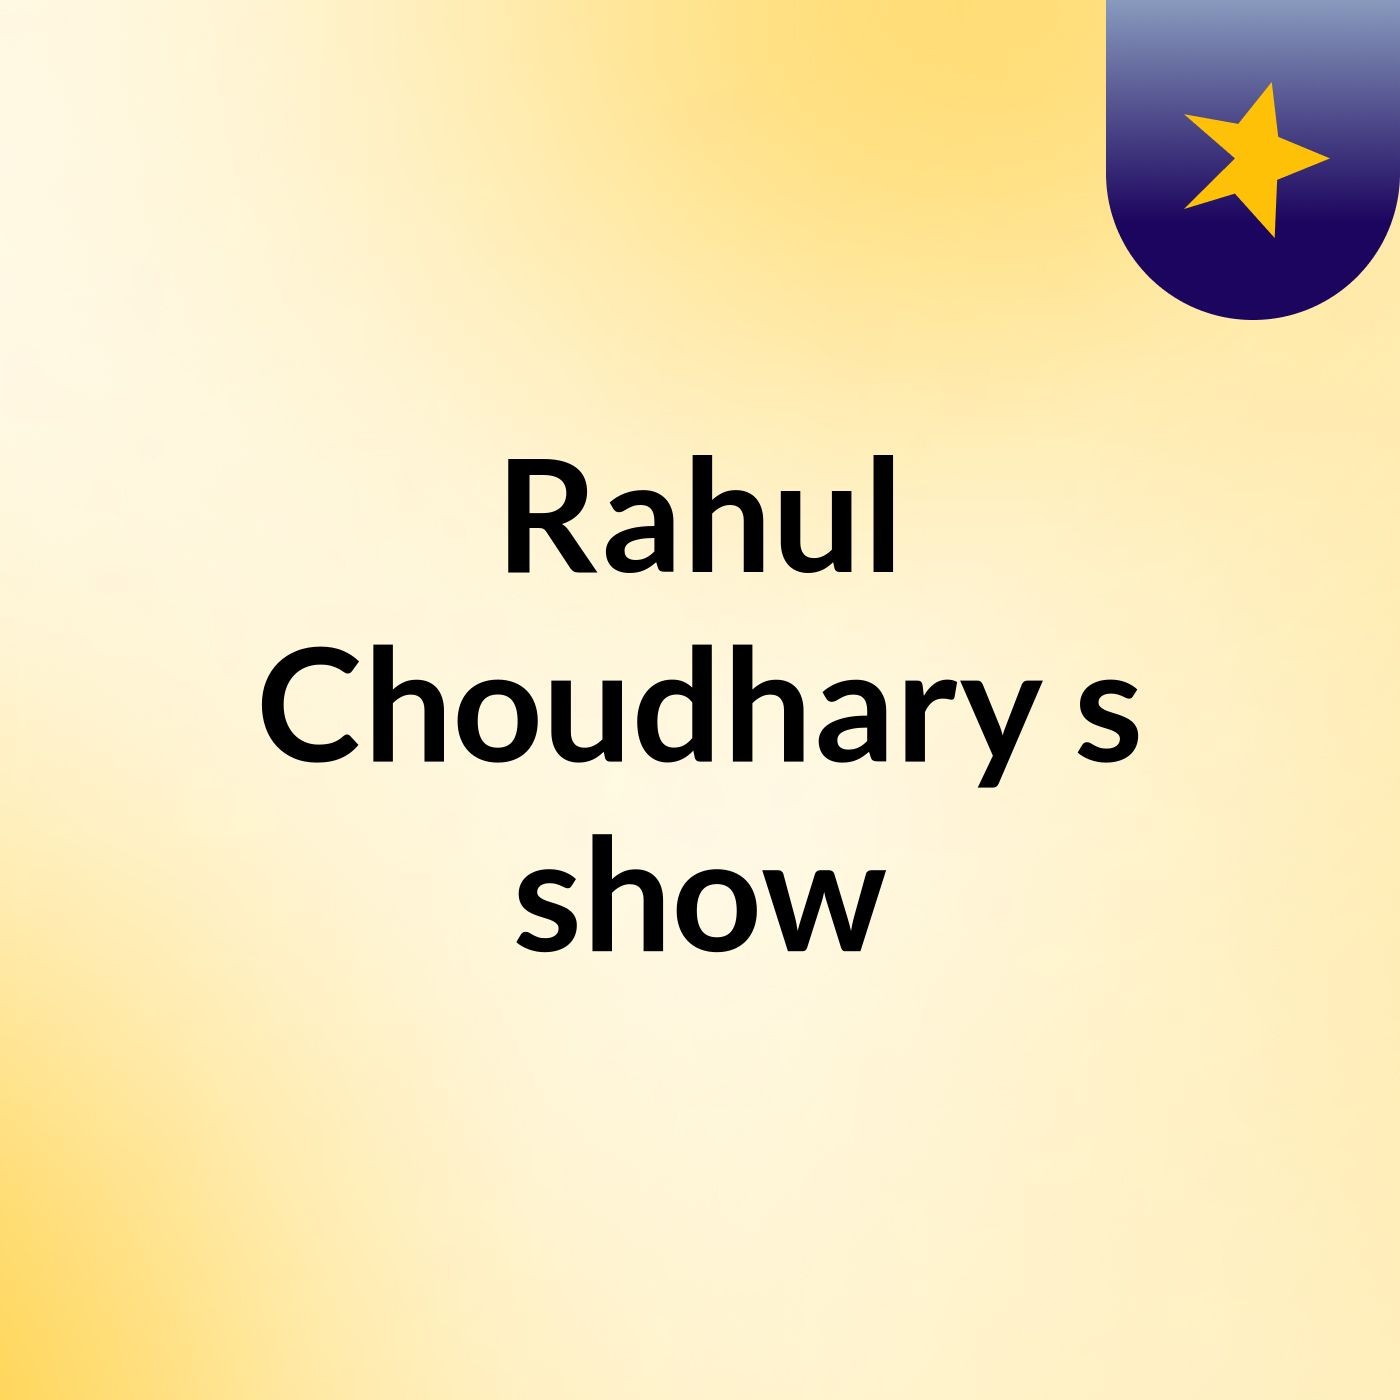 Rahul Choudhary's show